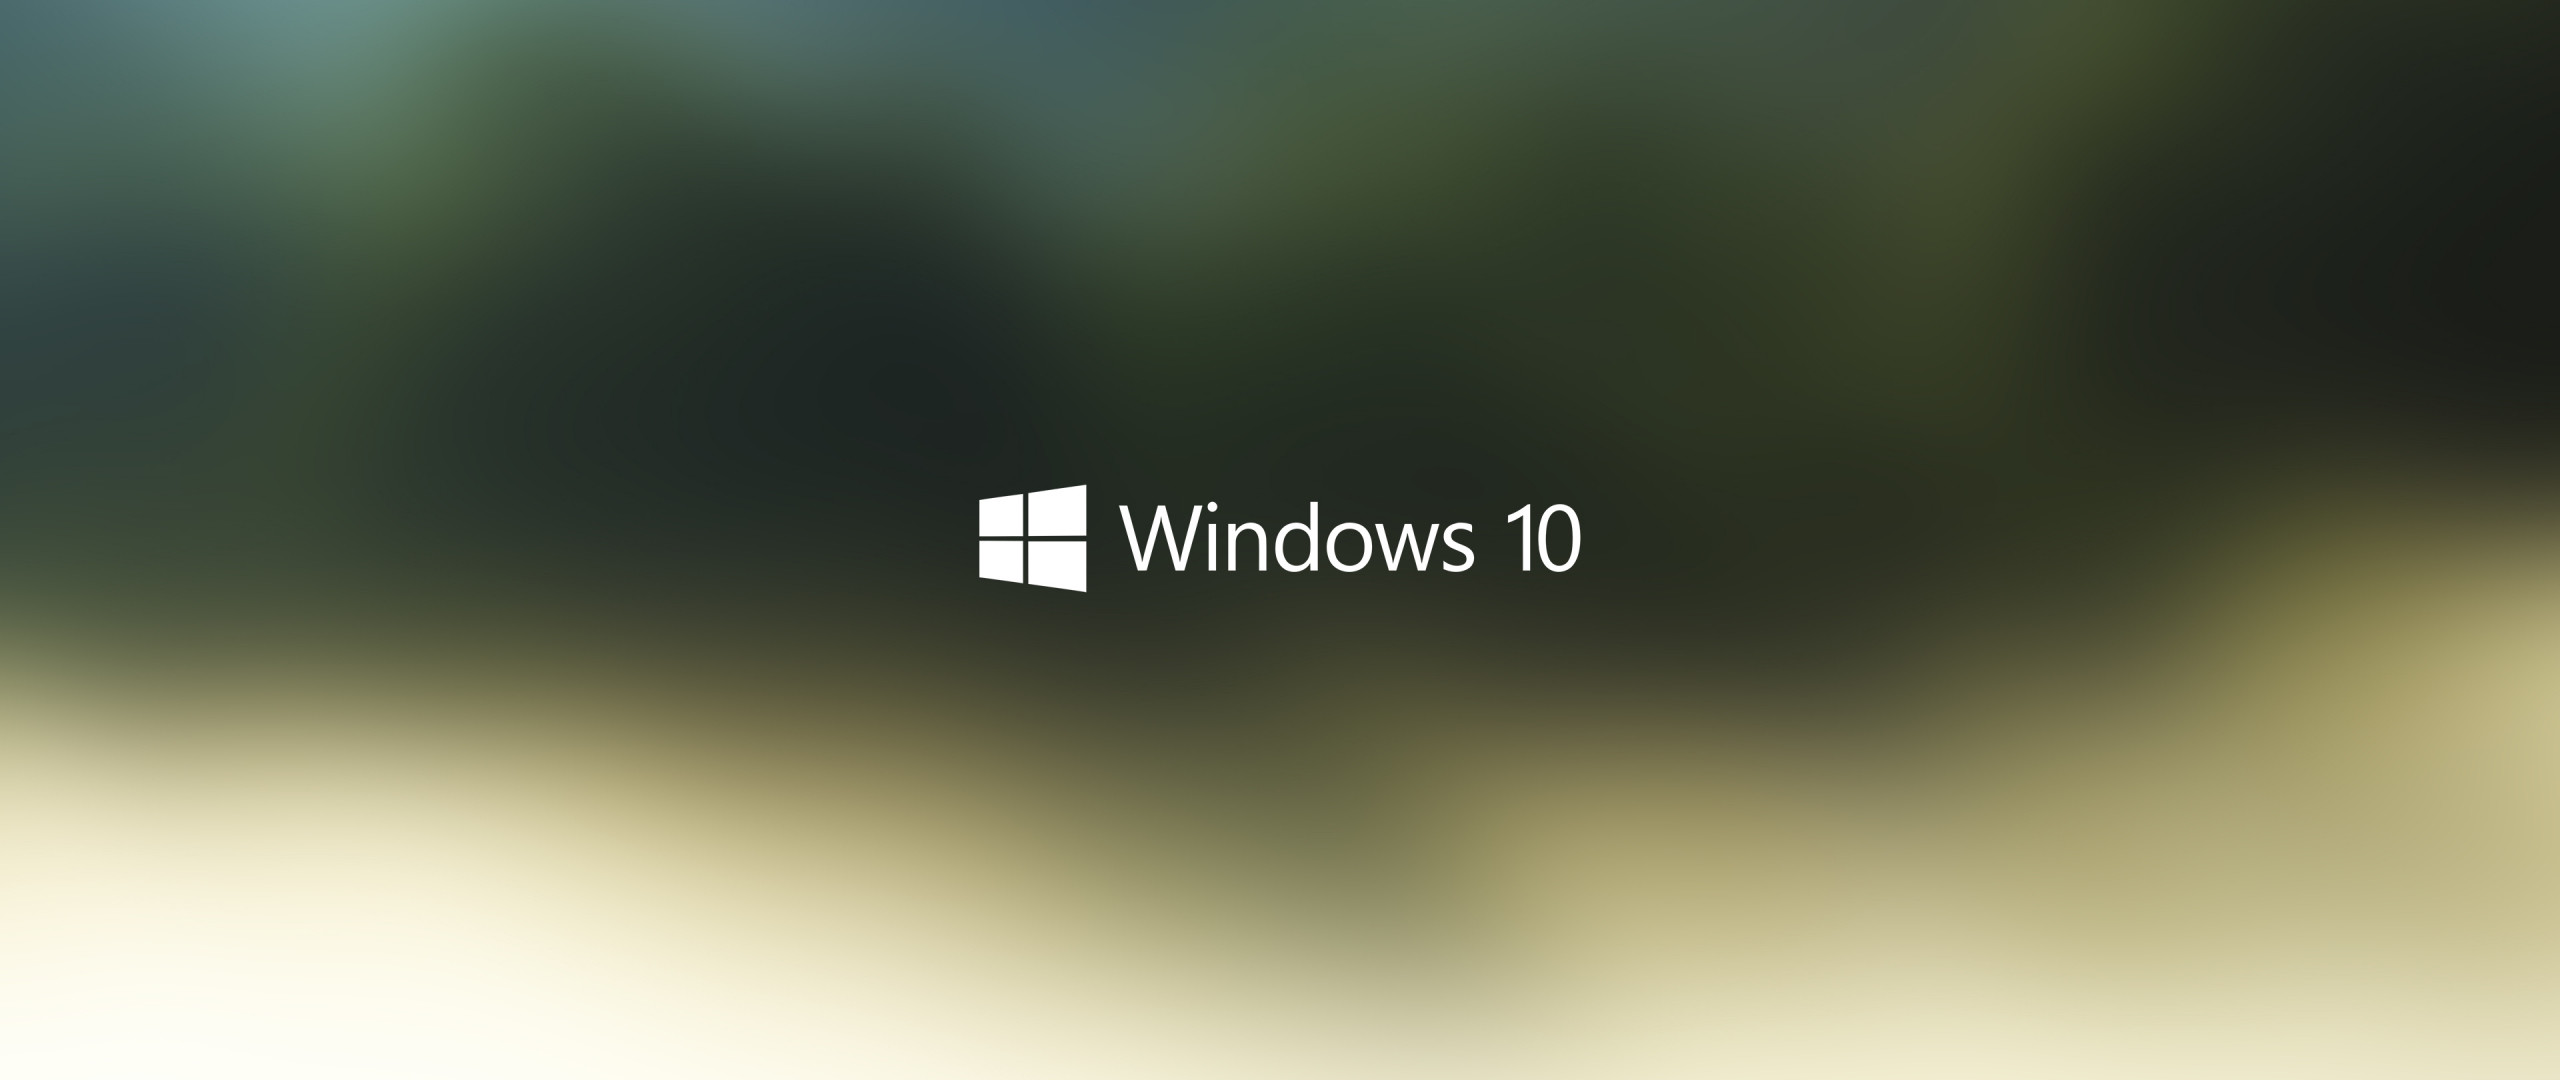 2560x1080  Wallpaper windows 10, logo, operating system